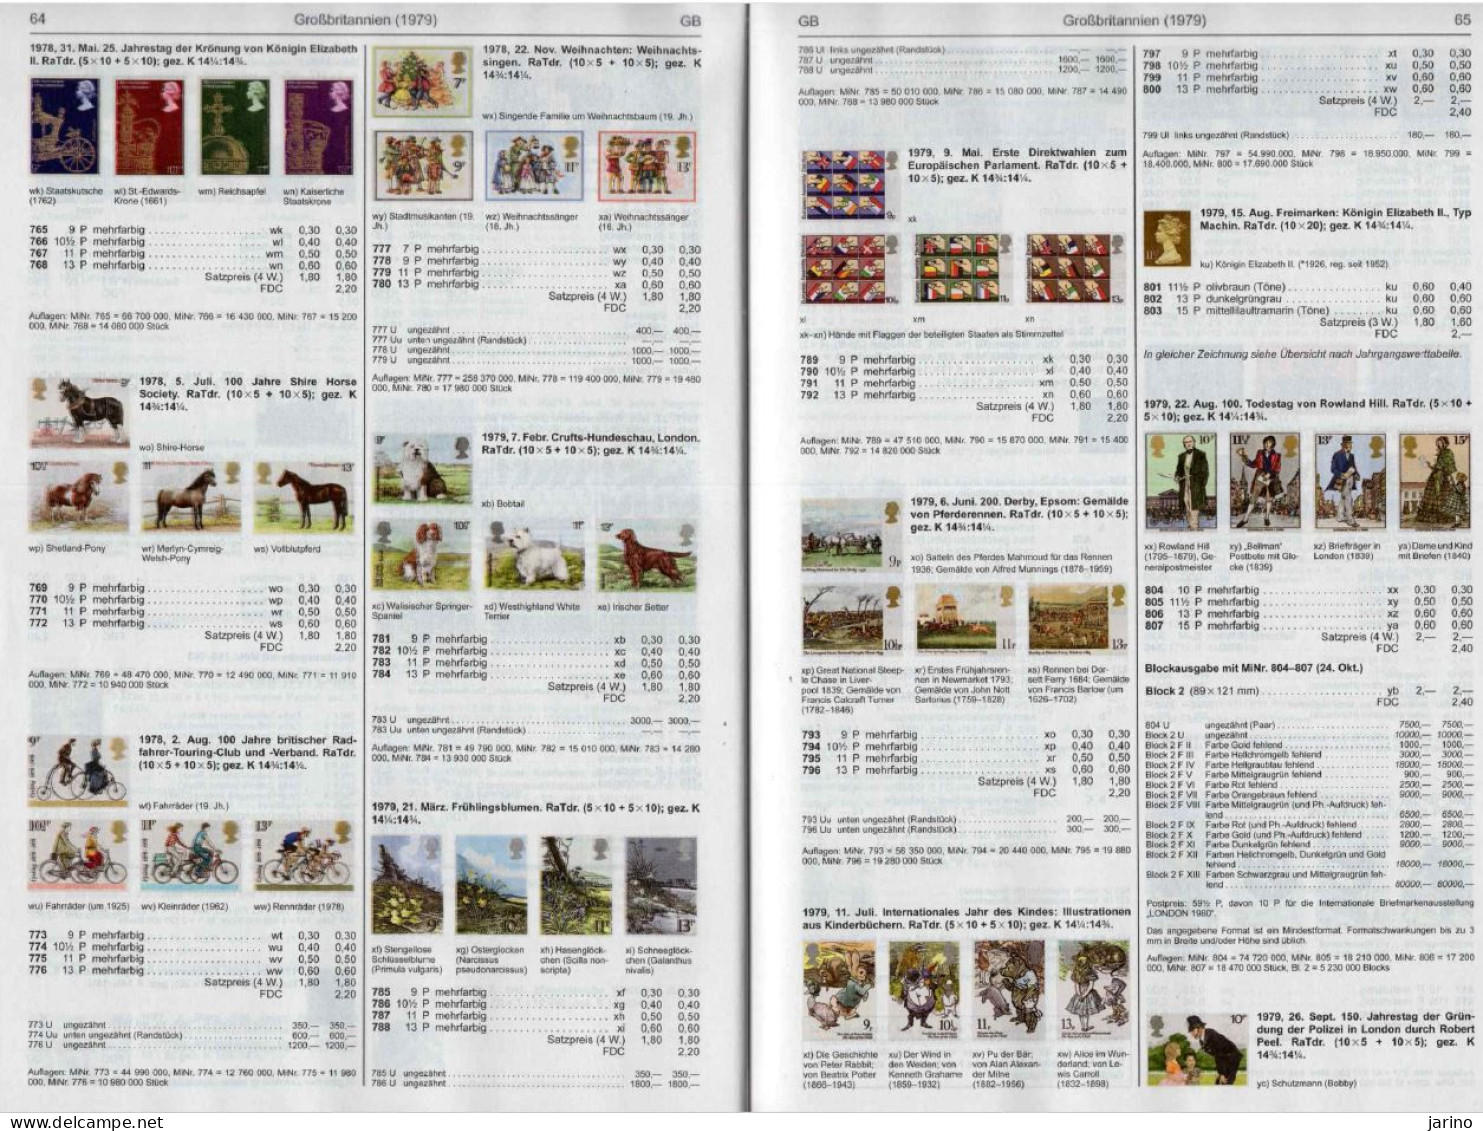 Grossbritannien Michel Catalogue 2022, 570 Pages On CD, UK, Nordirland, Schottland, Wales, Irland - Deutsch